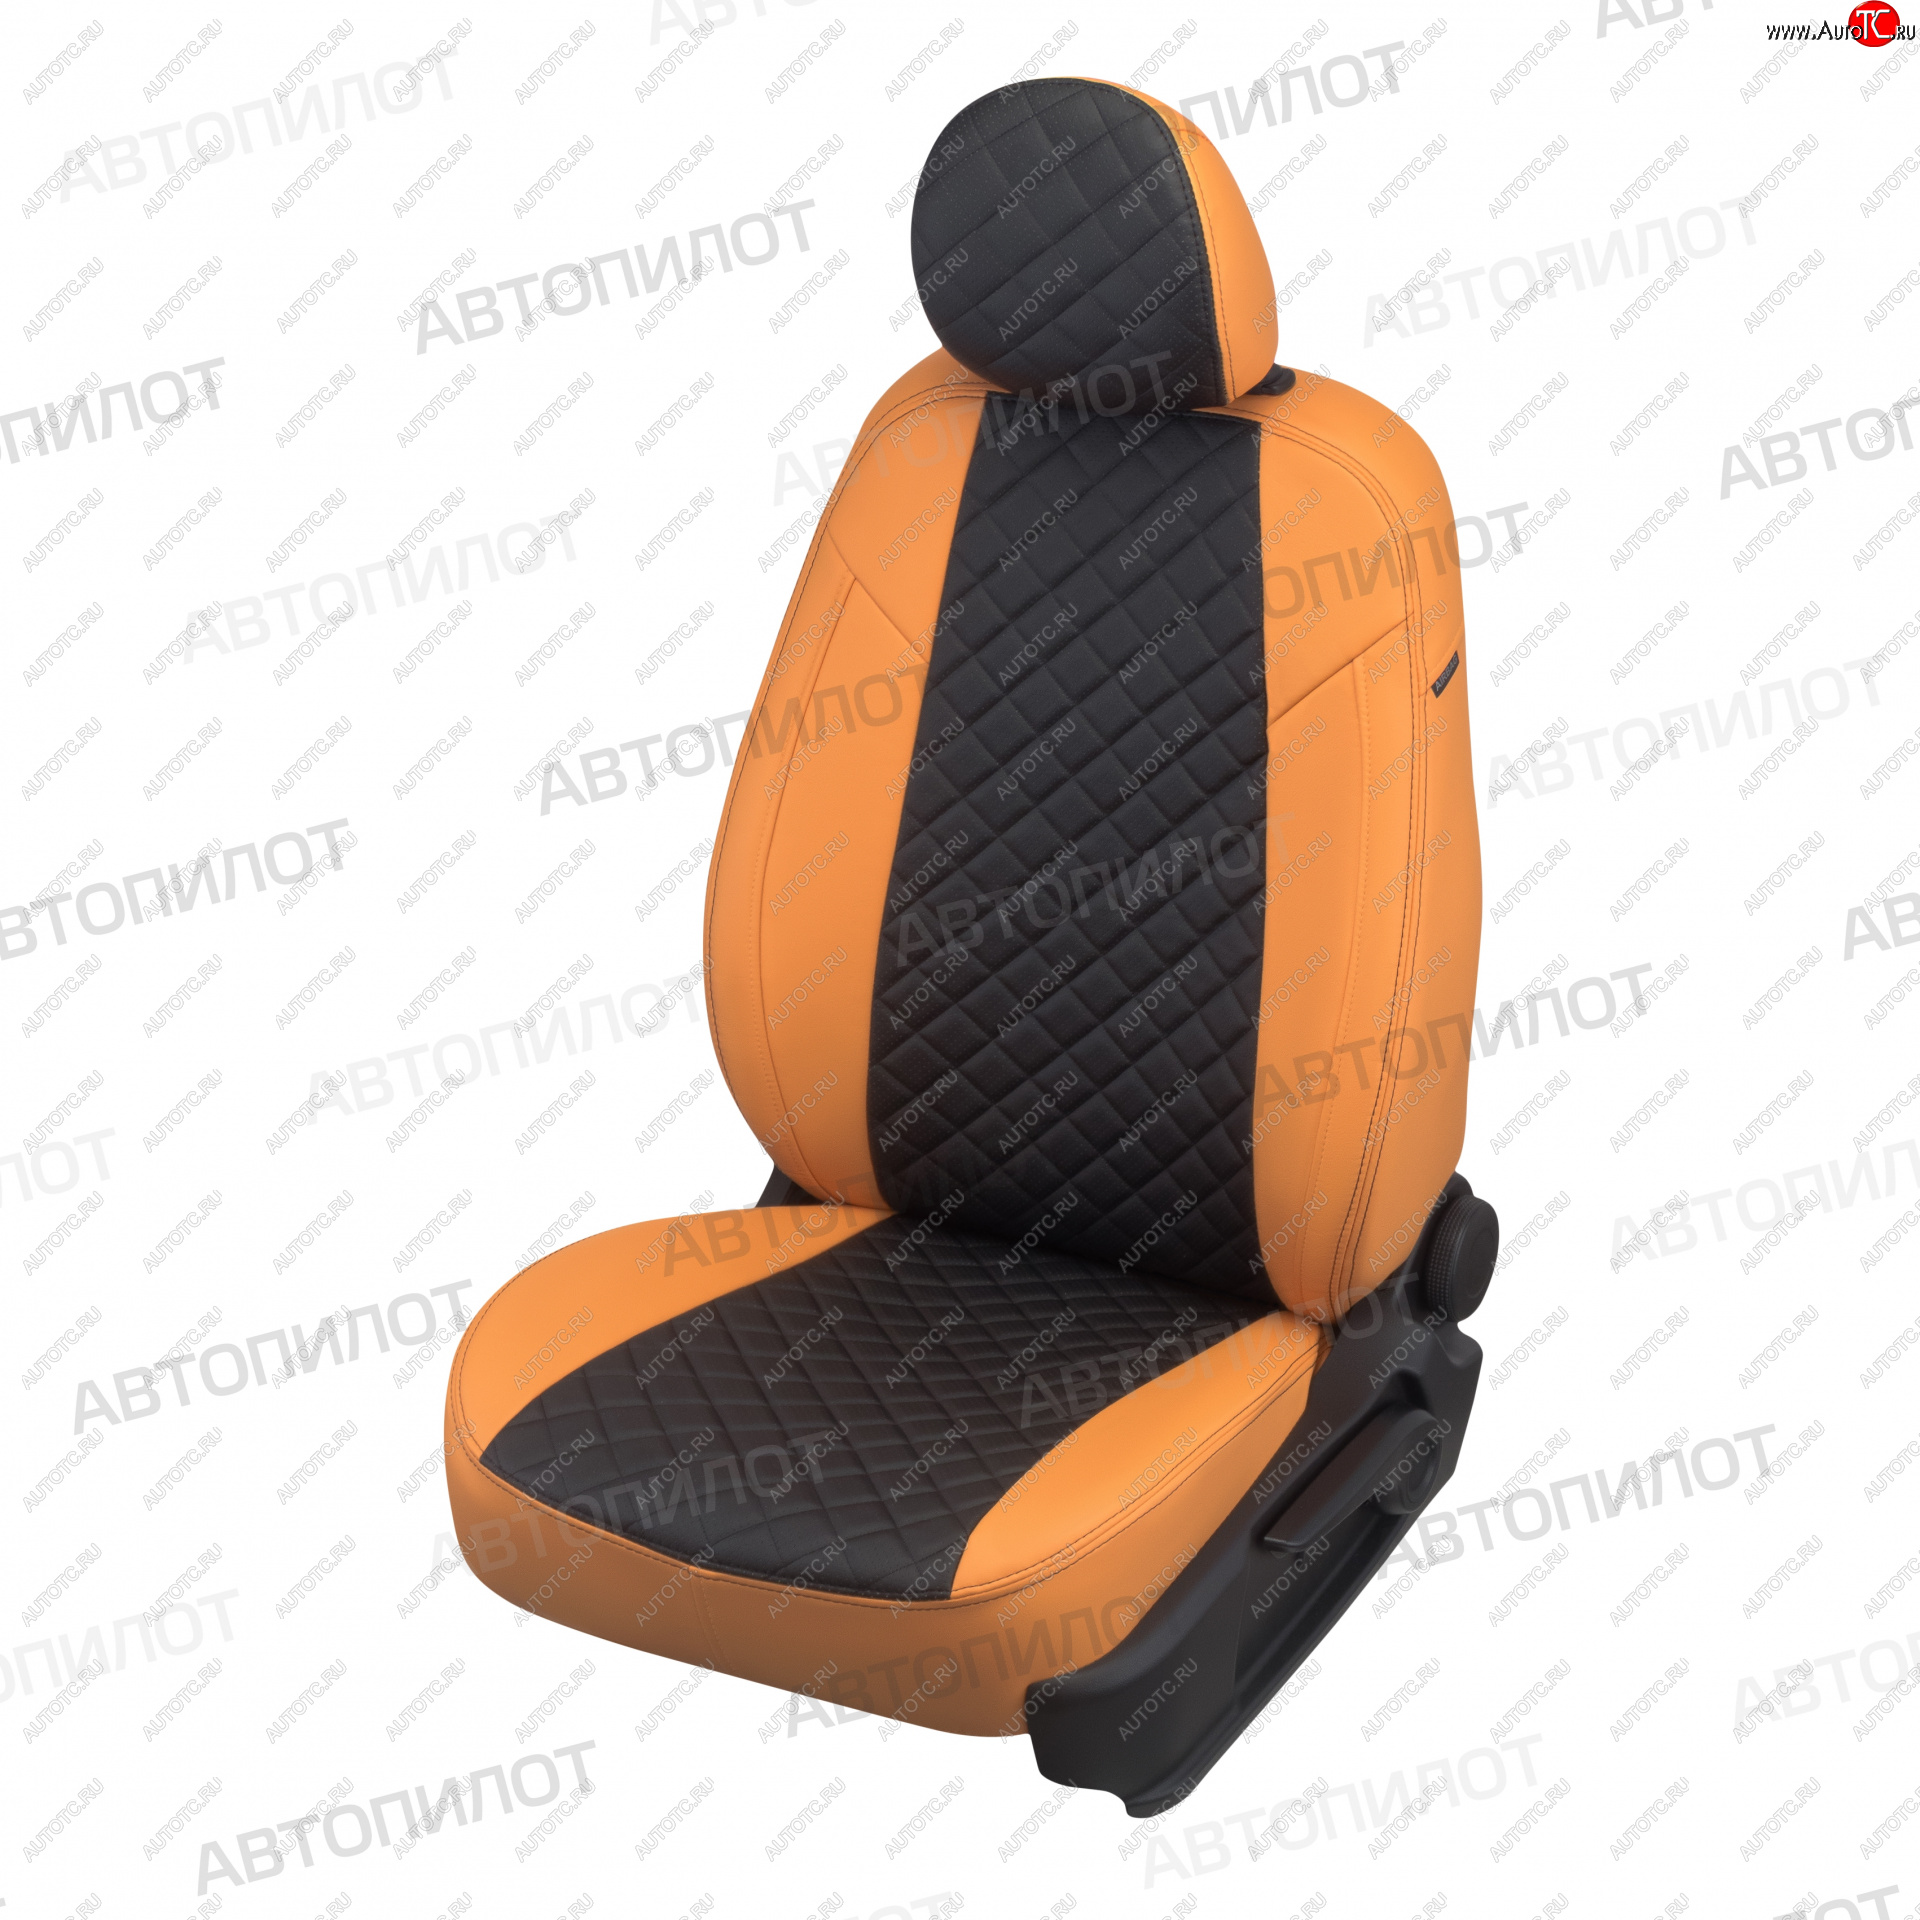 13 999 р. Чехлы сидений (экокожа) Автопилот Ромб  KIA Soul  2 PS (2014-2019) (оранж/черный)